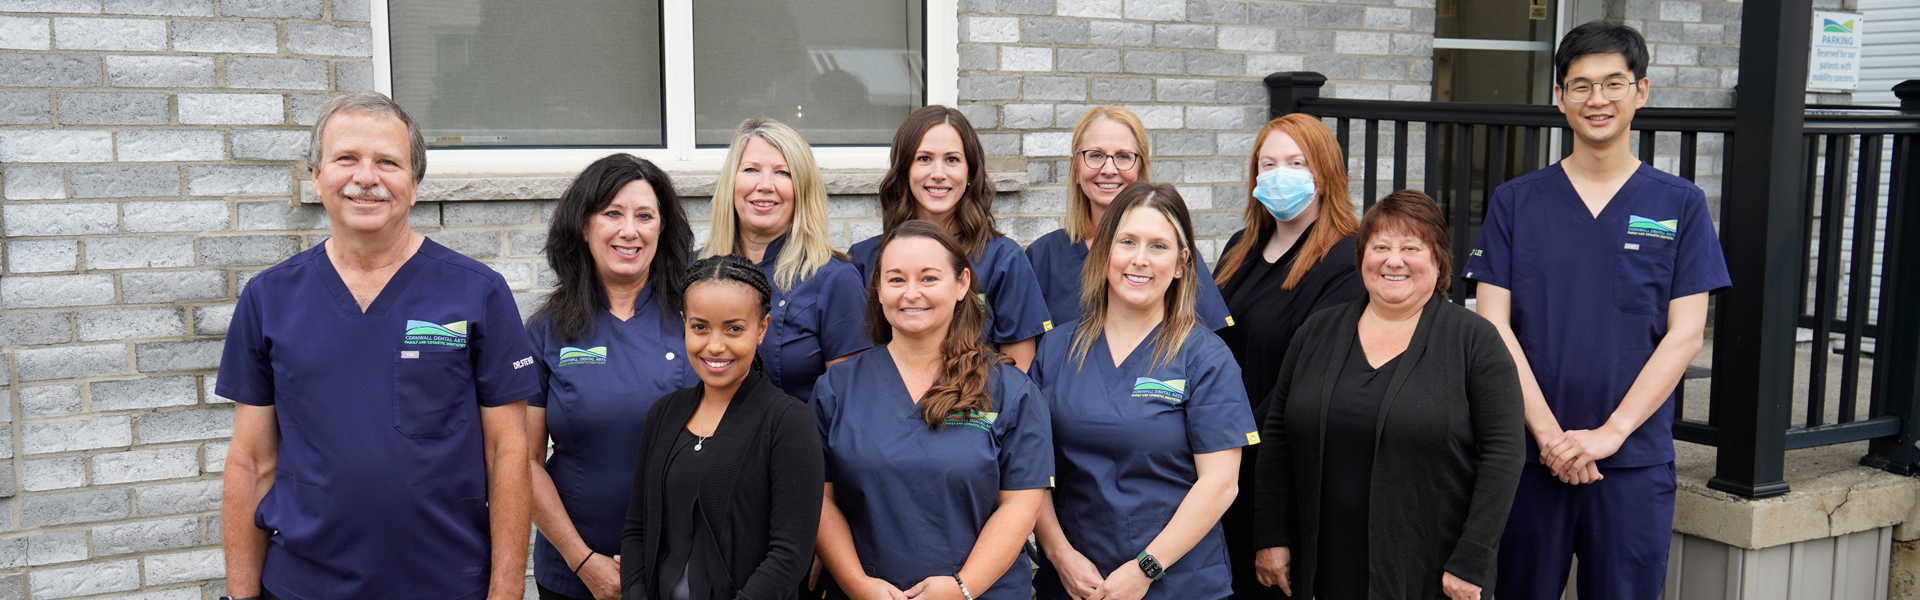 Cornwall Dental Arts Team